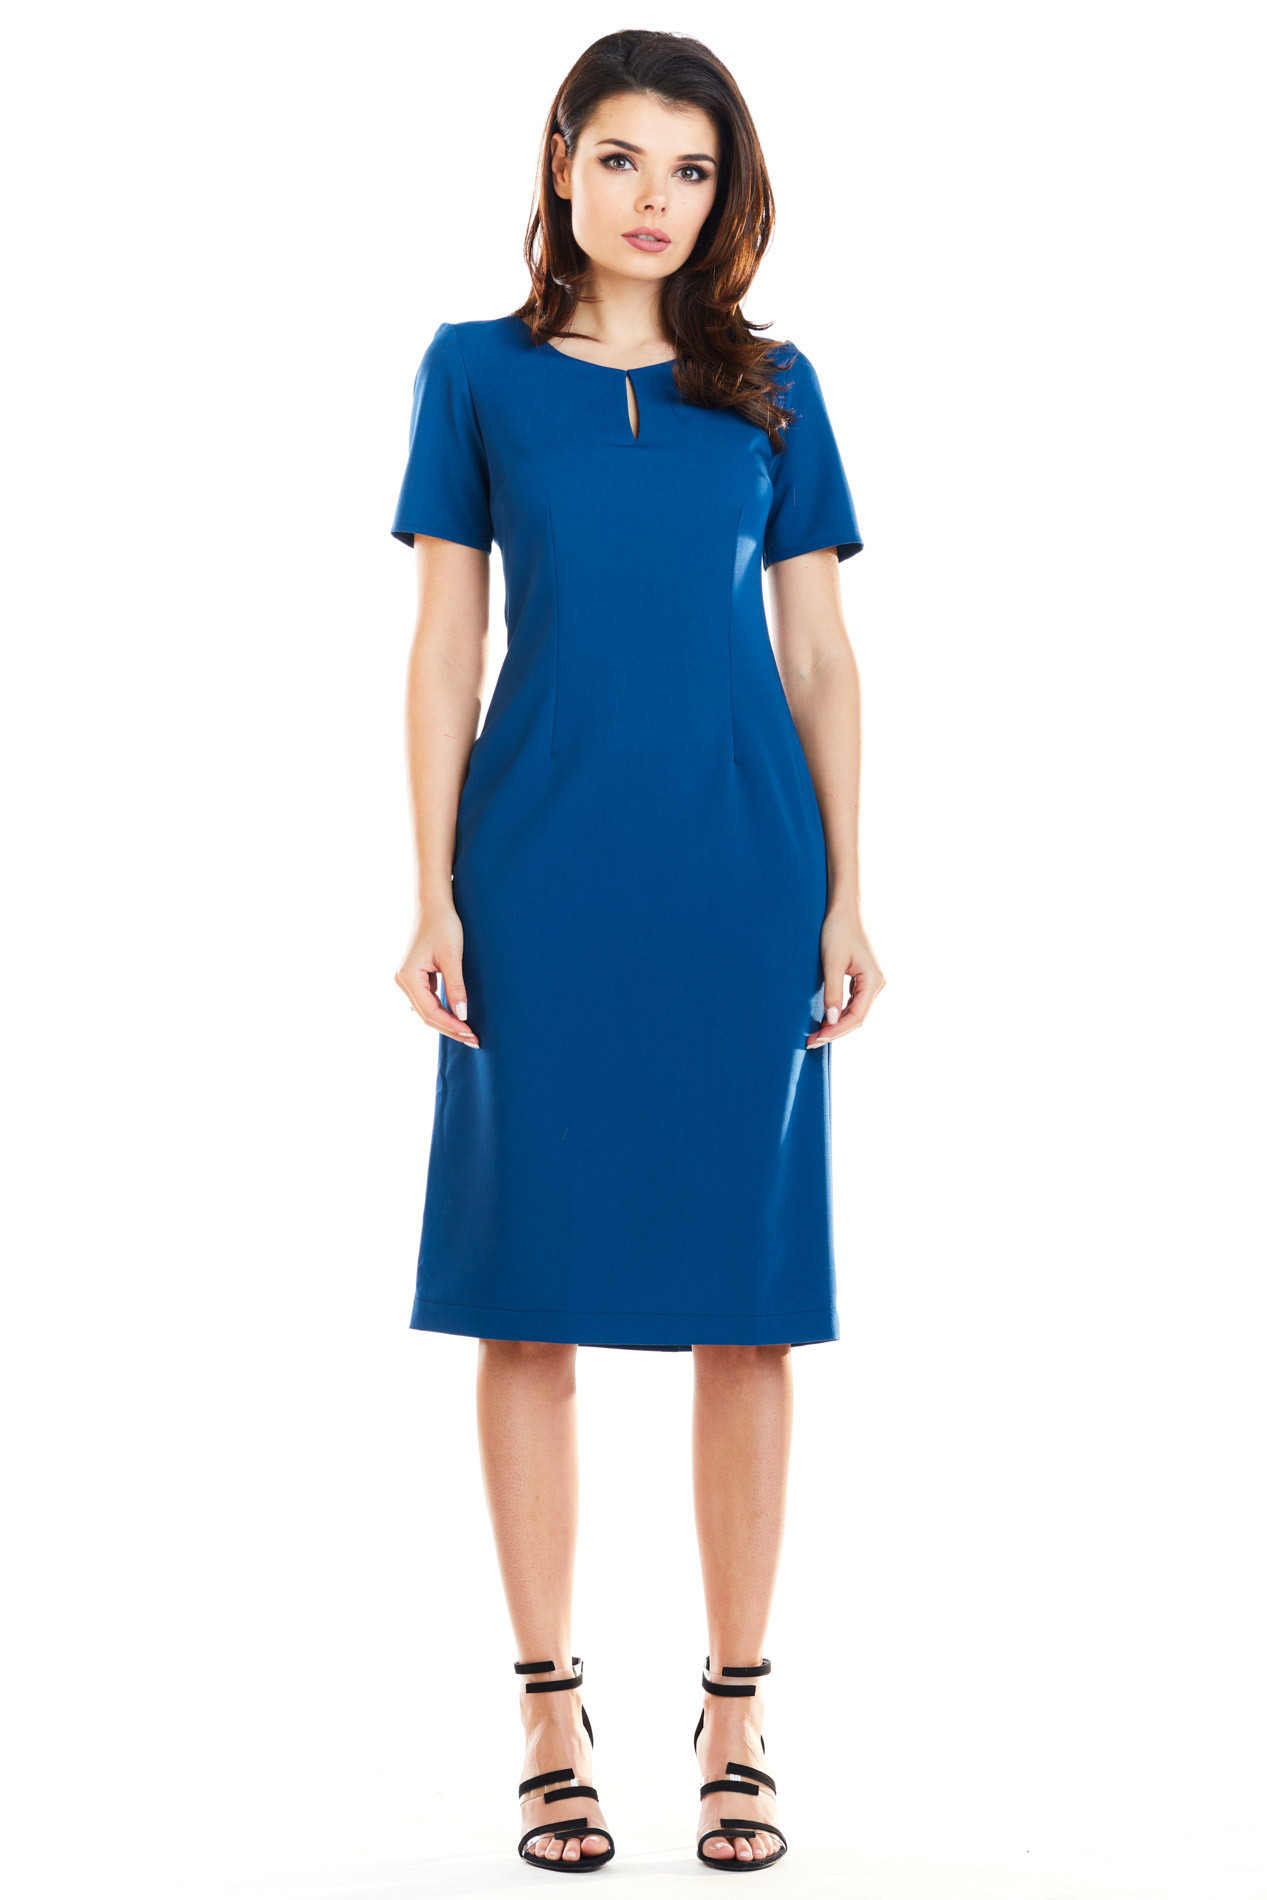 Dámské šaty model 17166407 - awama Velikost: M, Barvy: tm.Modrá